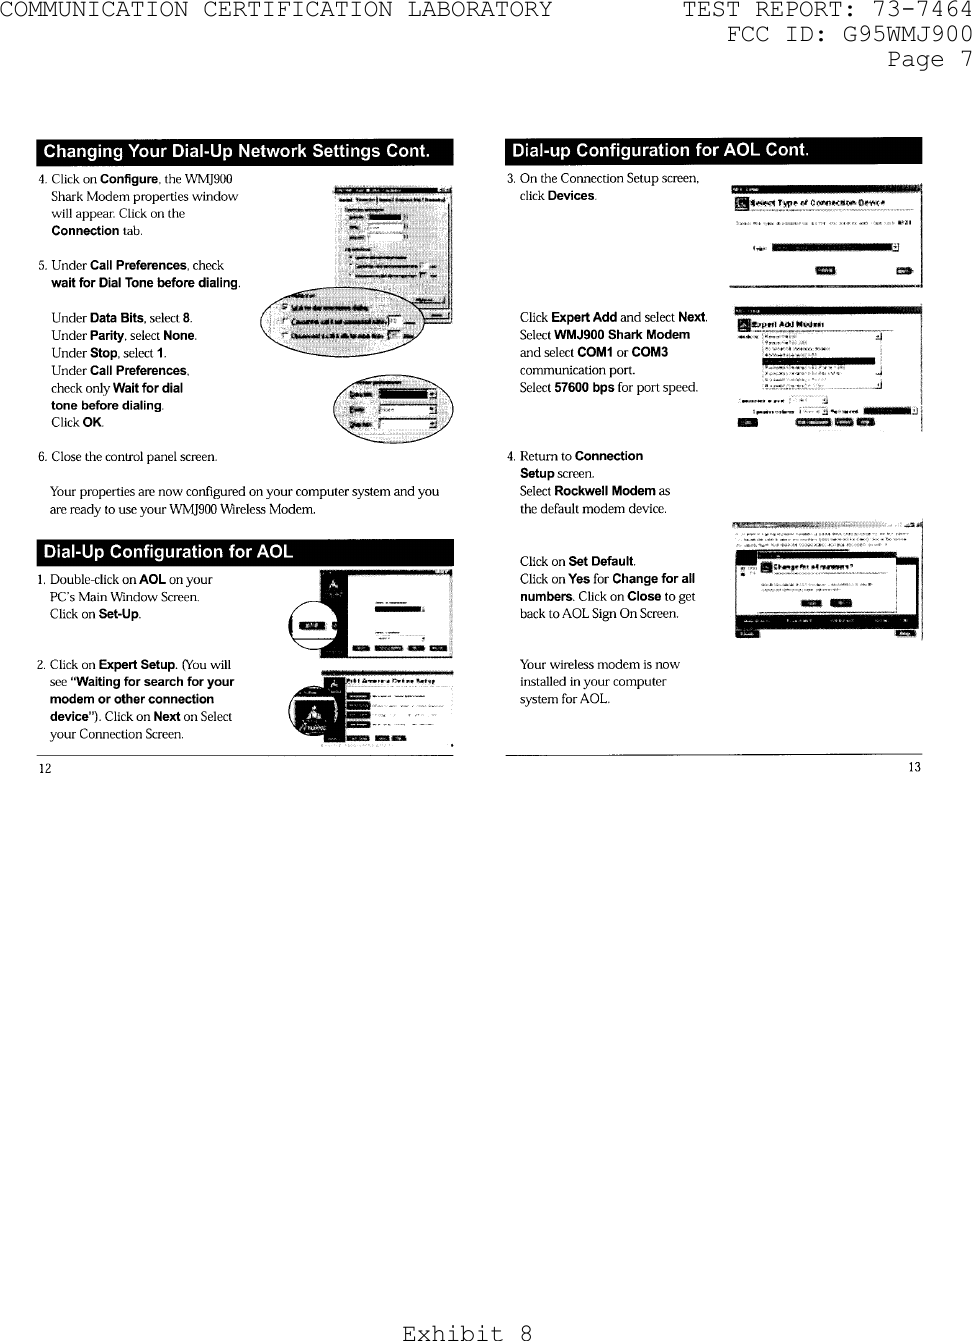 COMMUNICATION CERTIFICATION LABORATORY  TEST REPORT: 73-7464     FCC ID: G95WMJ900   Page 7 Exhibit 8    